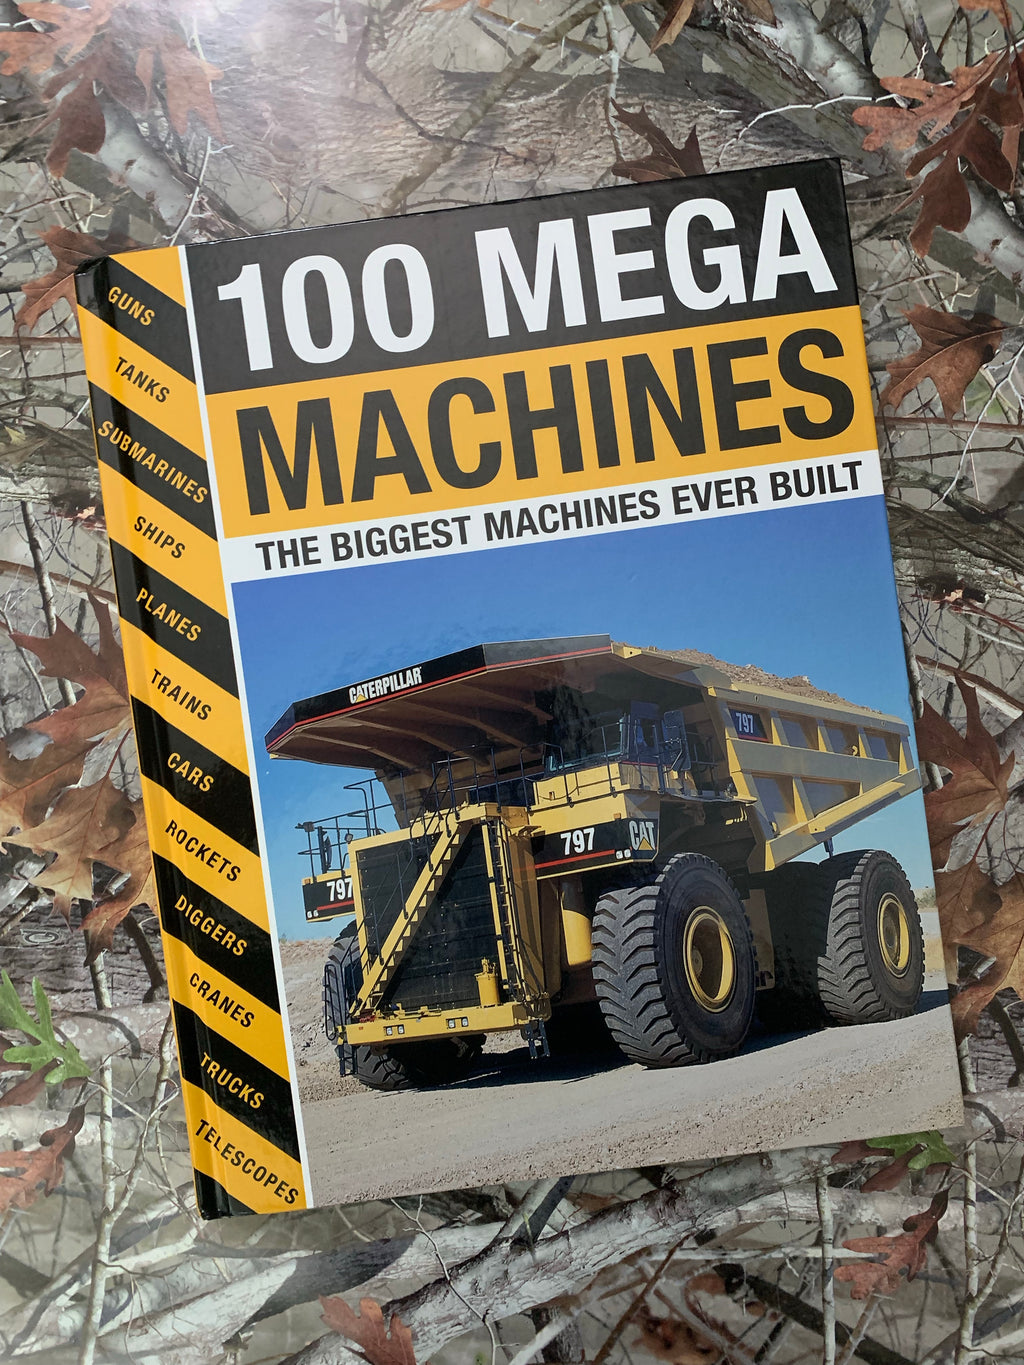 100 Mega Machines: The Biggest Ever Built